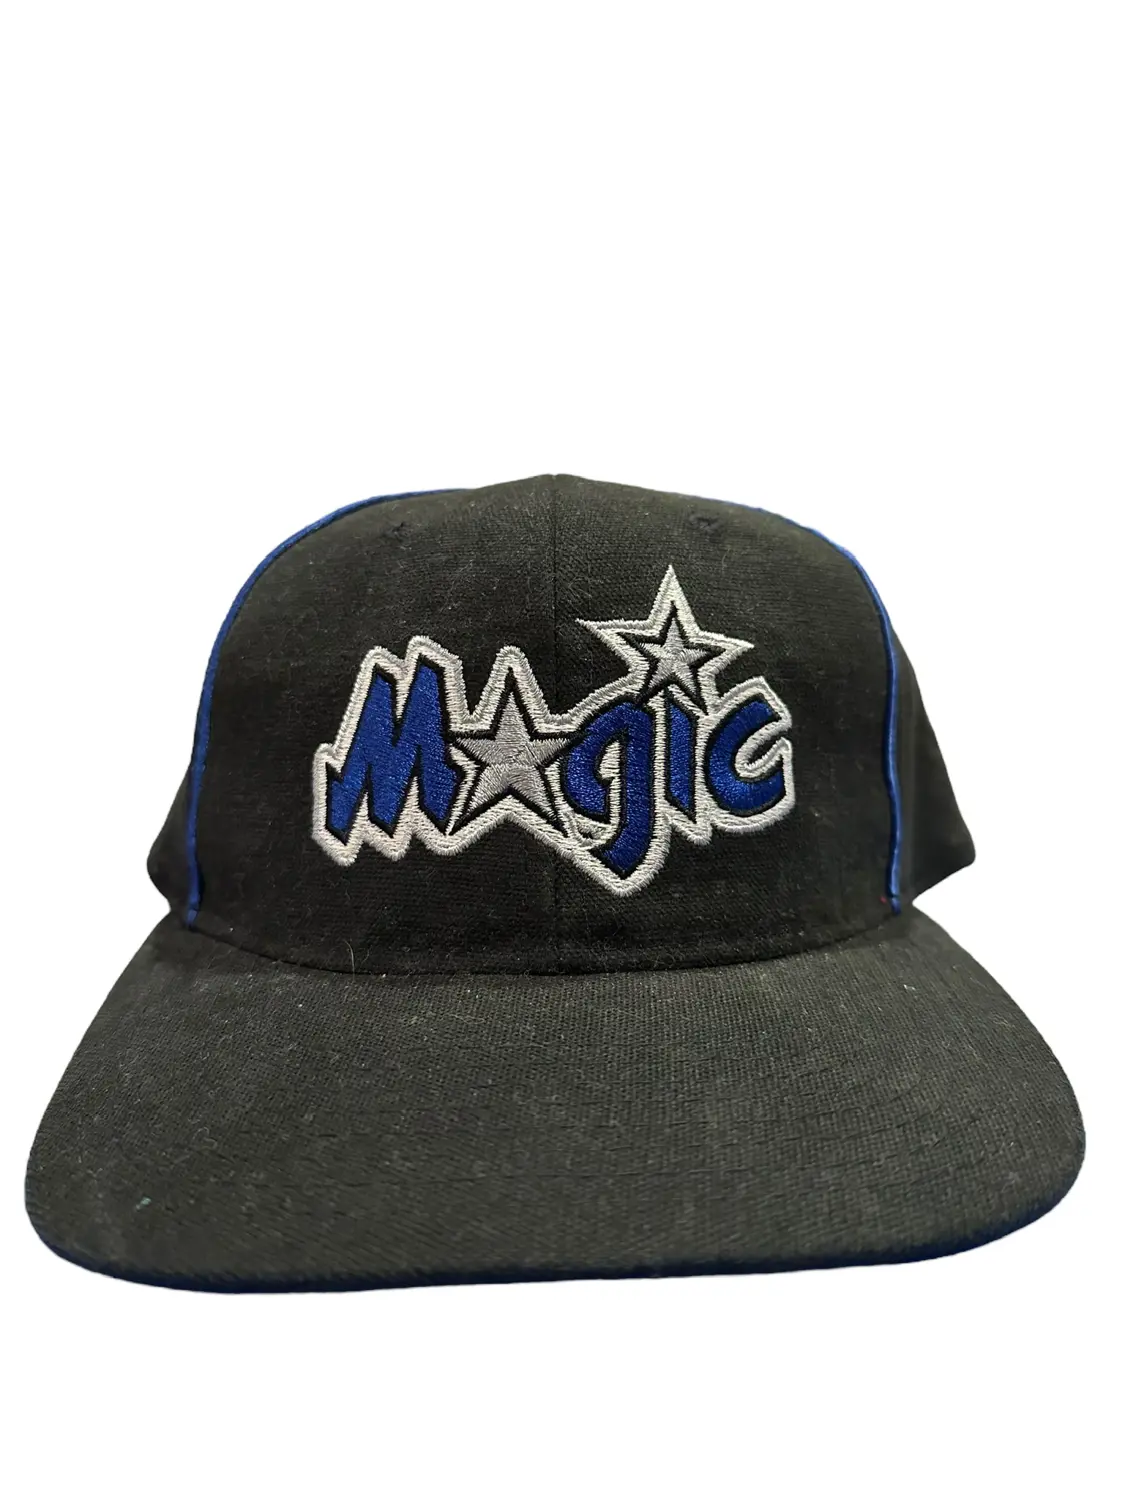 Orlando Magic Starter Hat